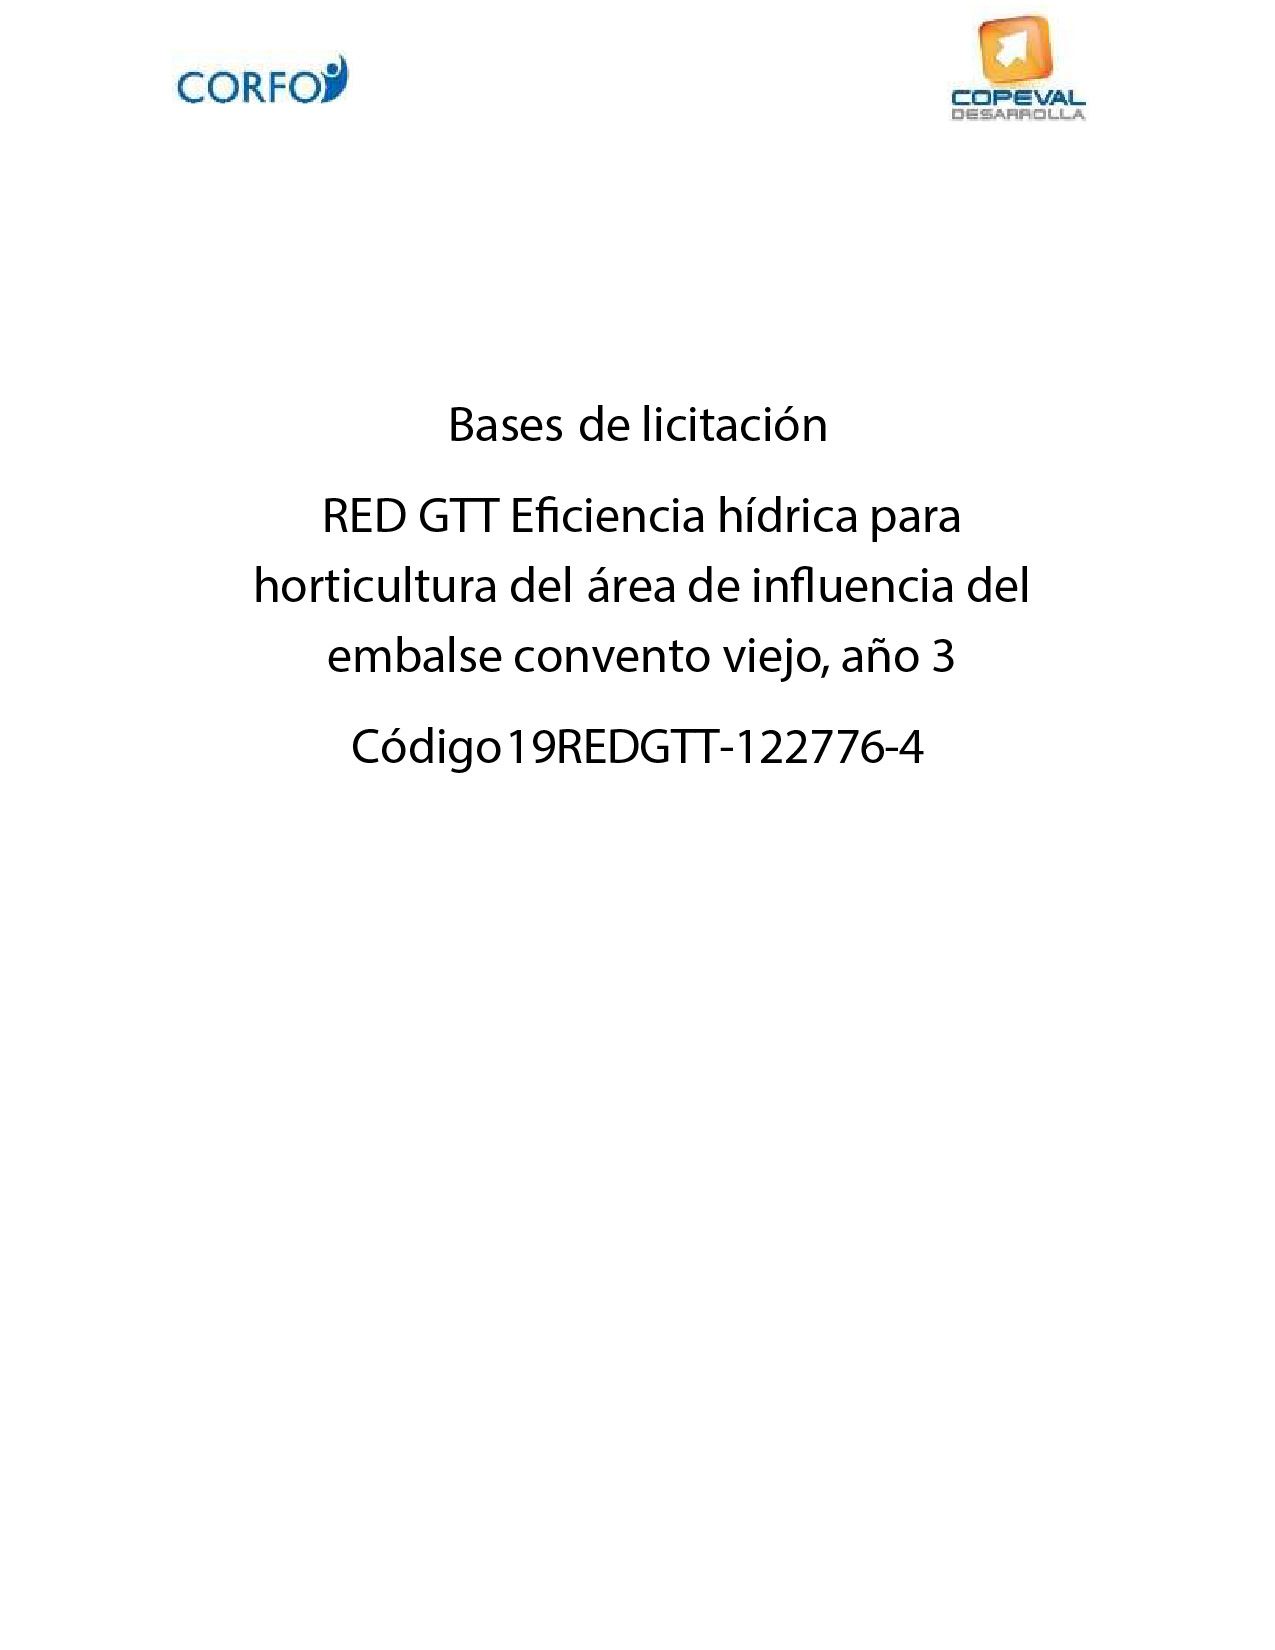 TDR RED GTT HORT , 19REDGTT-122776-4-01